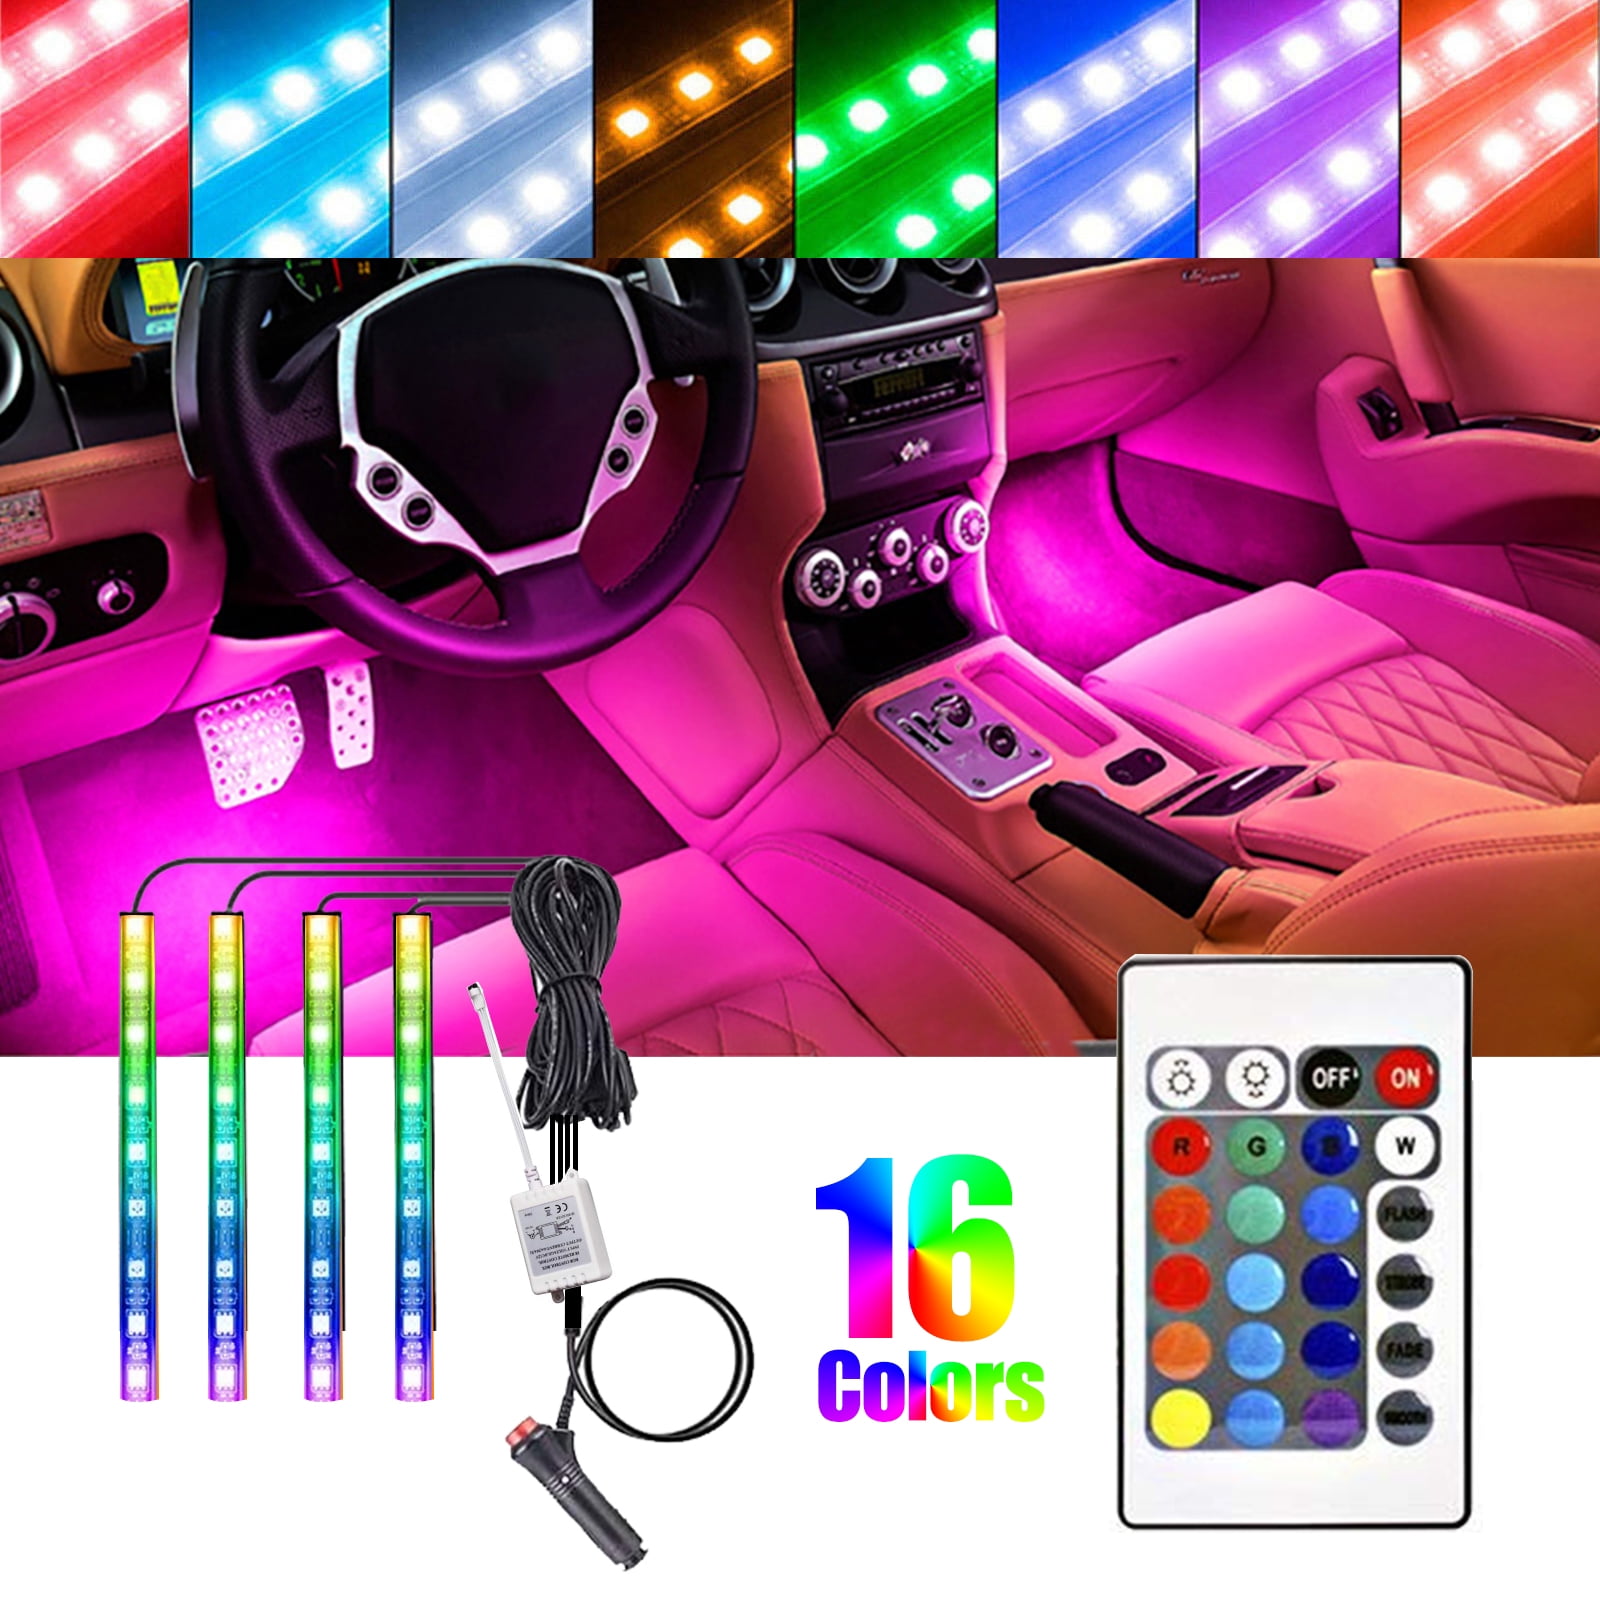 48-LED Multi Colore con Sound Active e Telecomando Wireless IR USB 4Pcs Car LED Interior Light Neon Floor Atmosfera Decorative Underdash Strip Lights Kit 